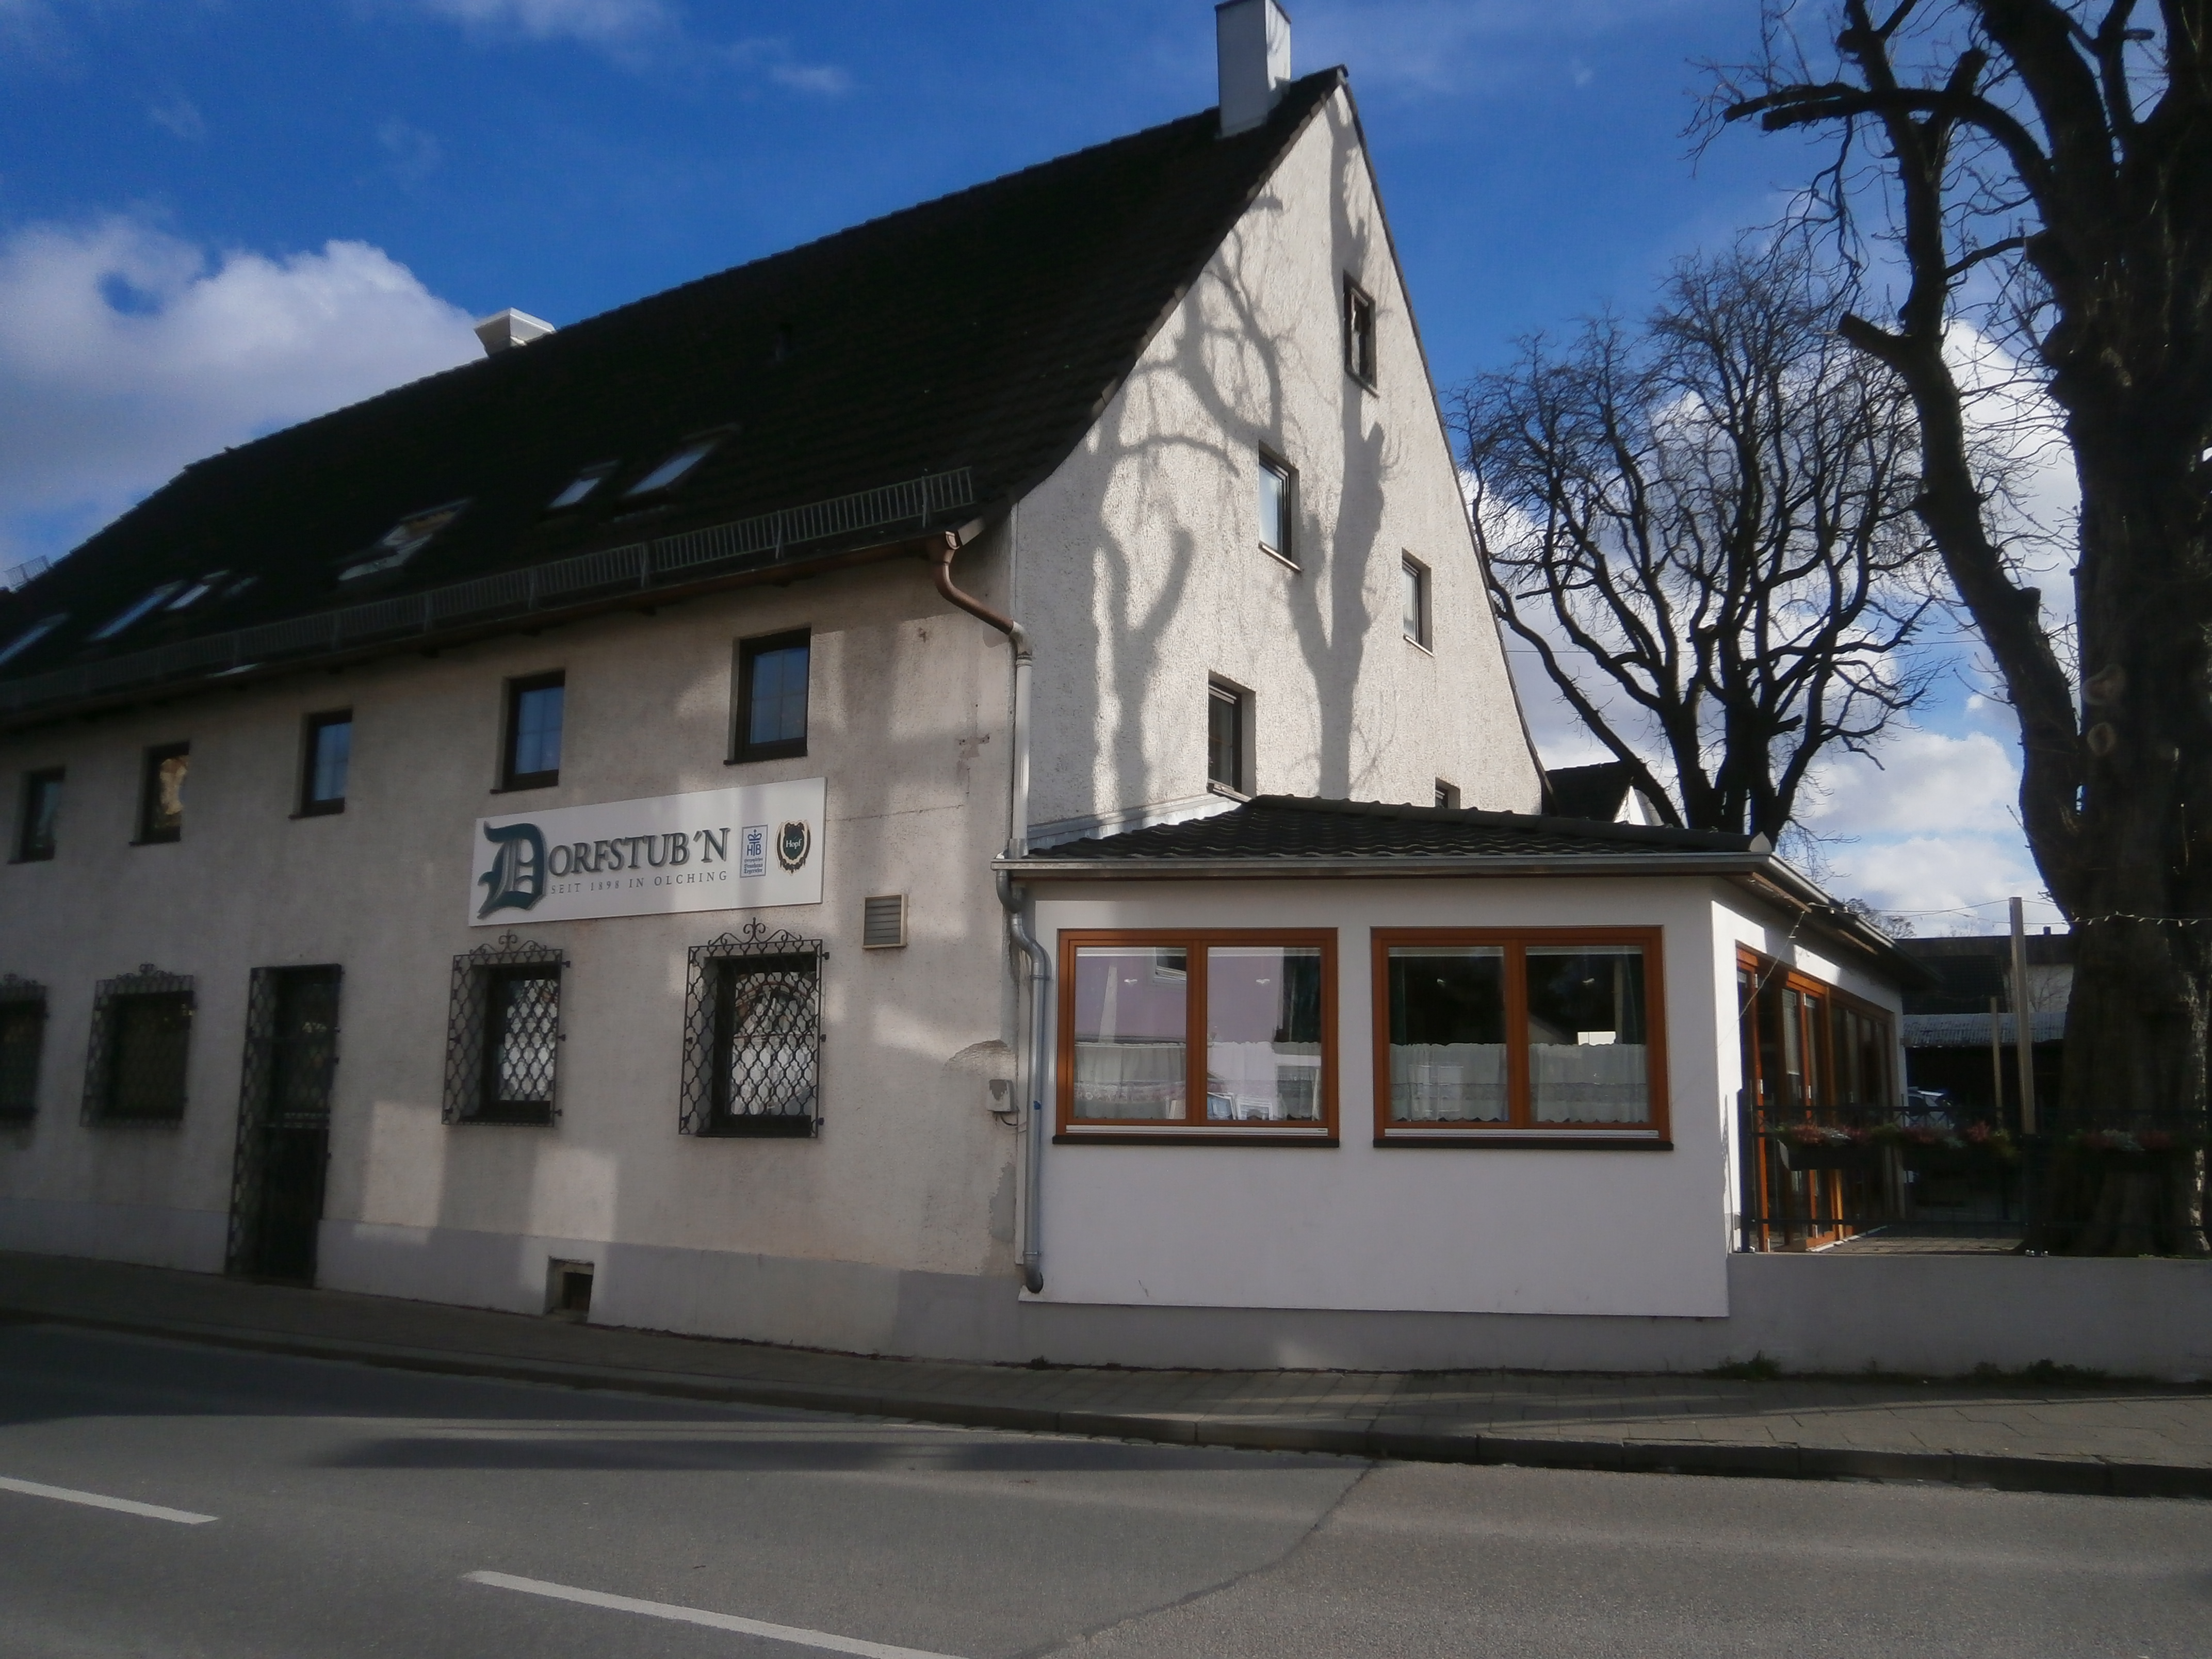 Bild 1 Dorfstubn in Olching